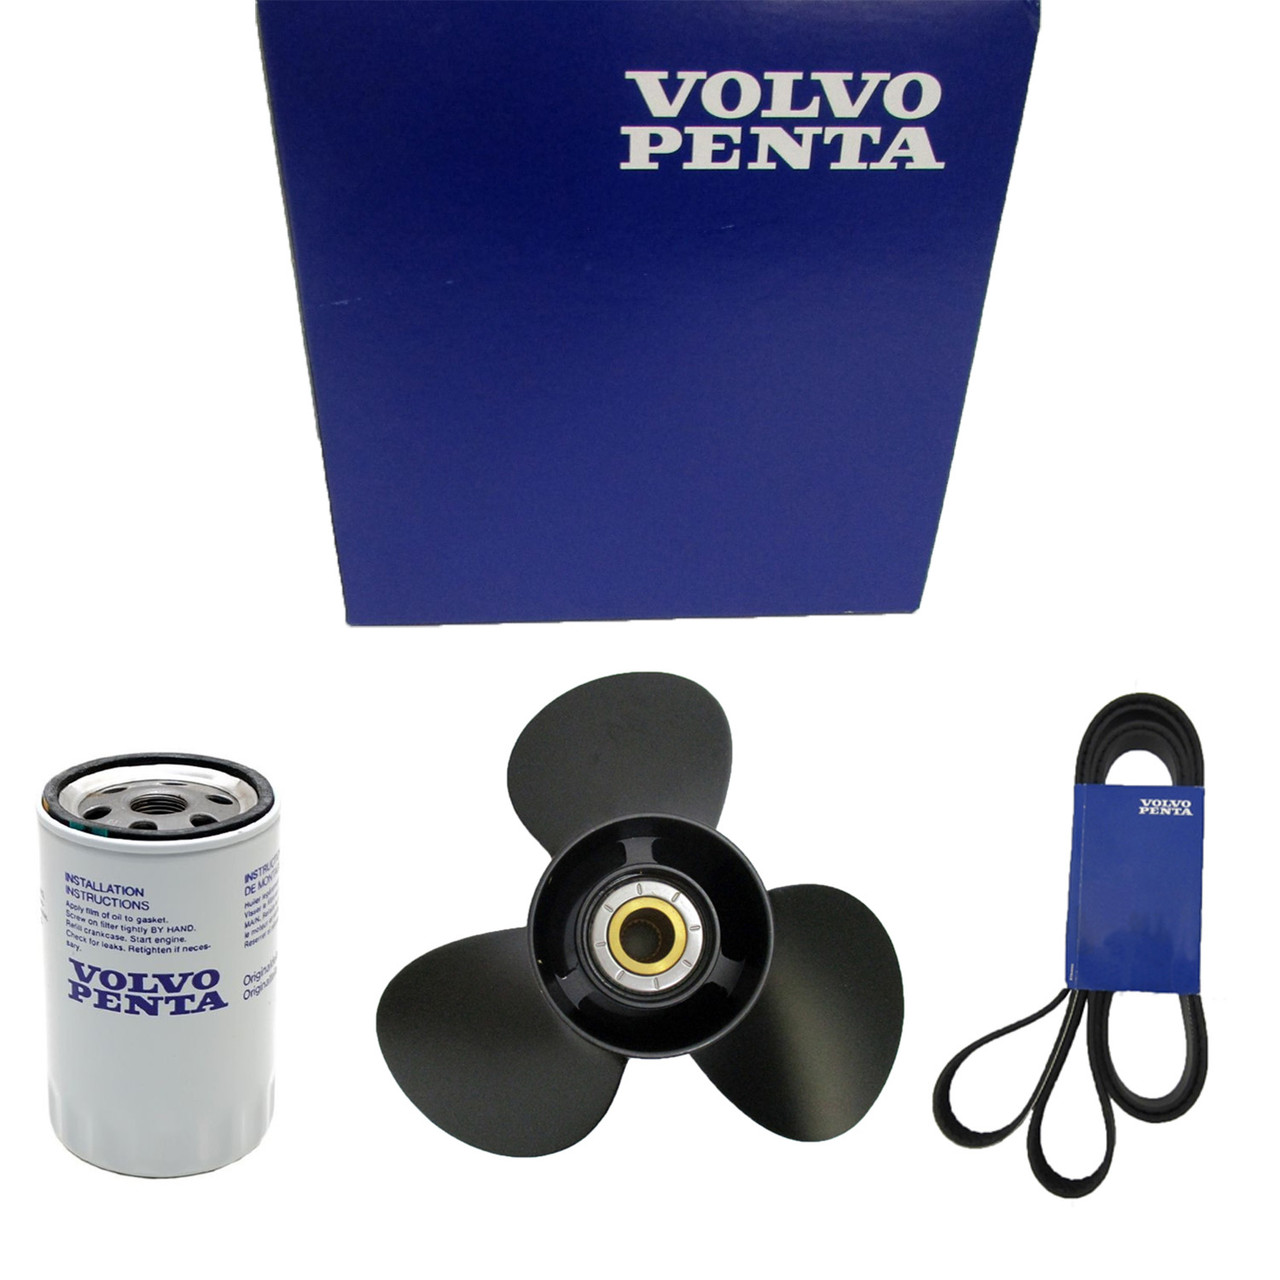 Volvo Penta New OEM Fuel Filter, 21409660